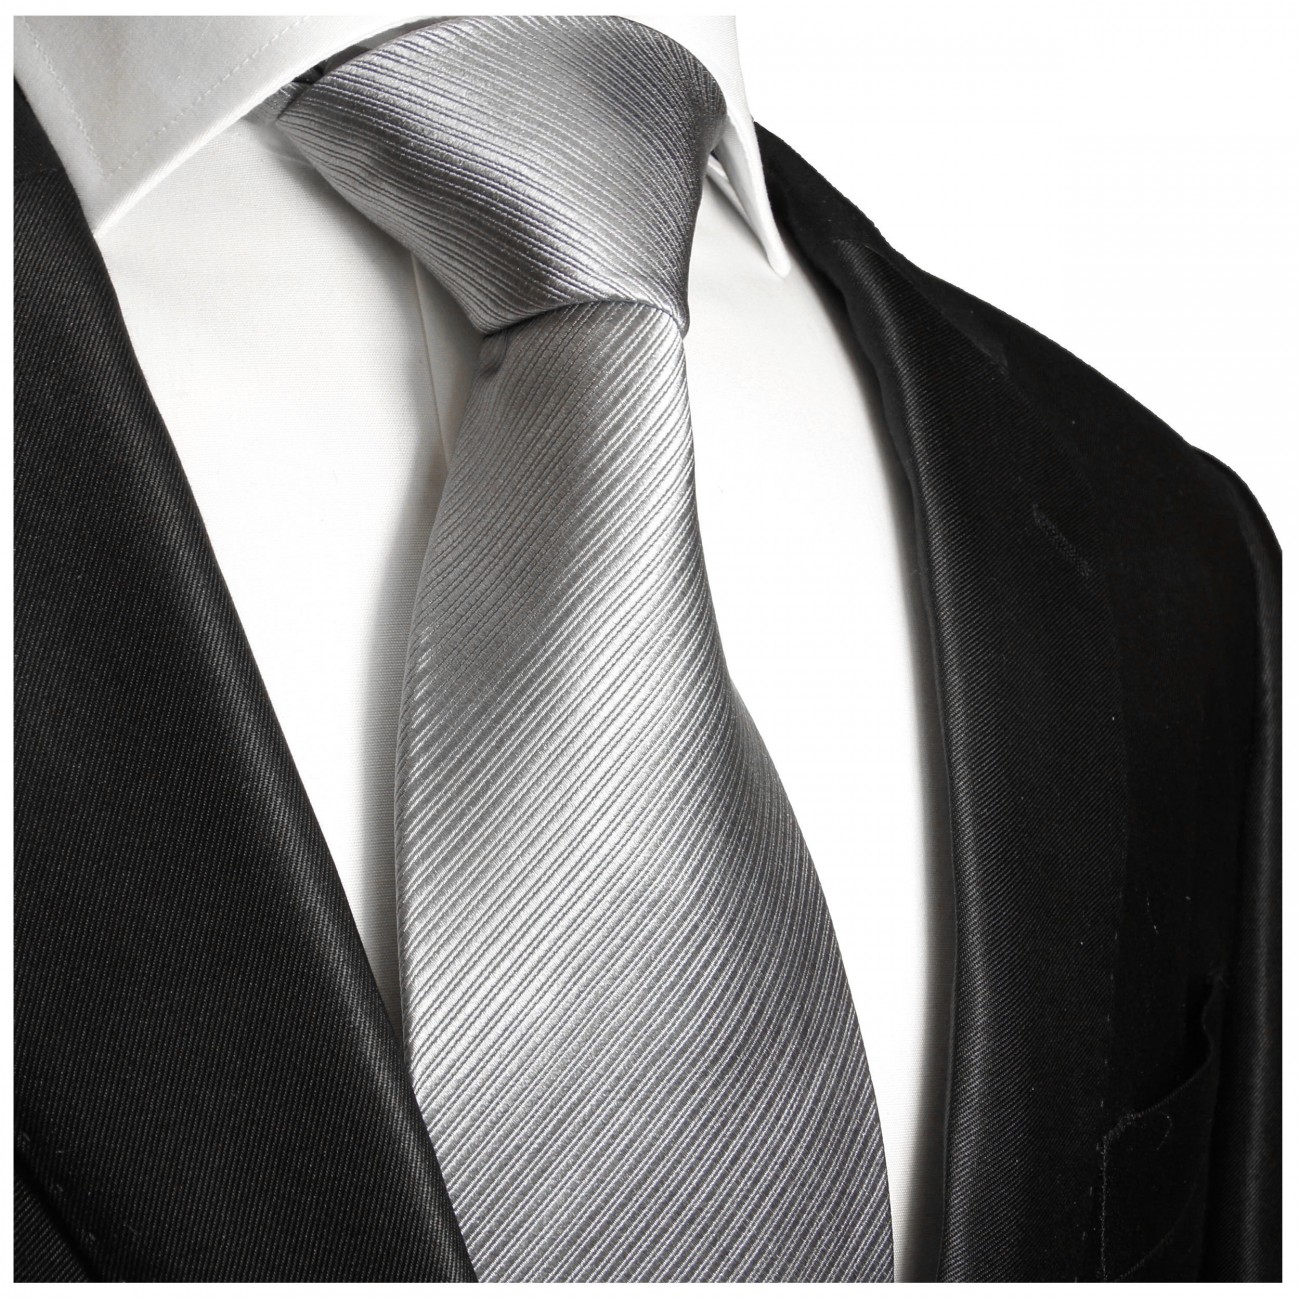 Krawatte silber grau uni 977 | JETZT BESTELLEN - Paul Malone Shop